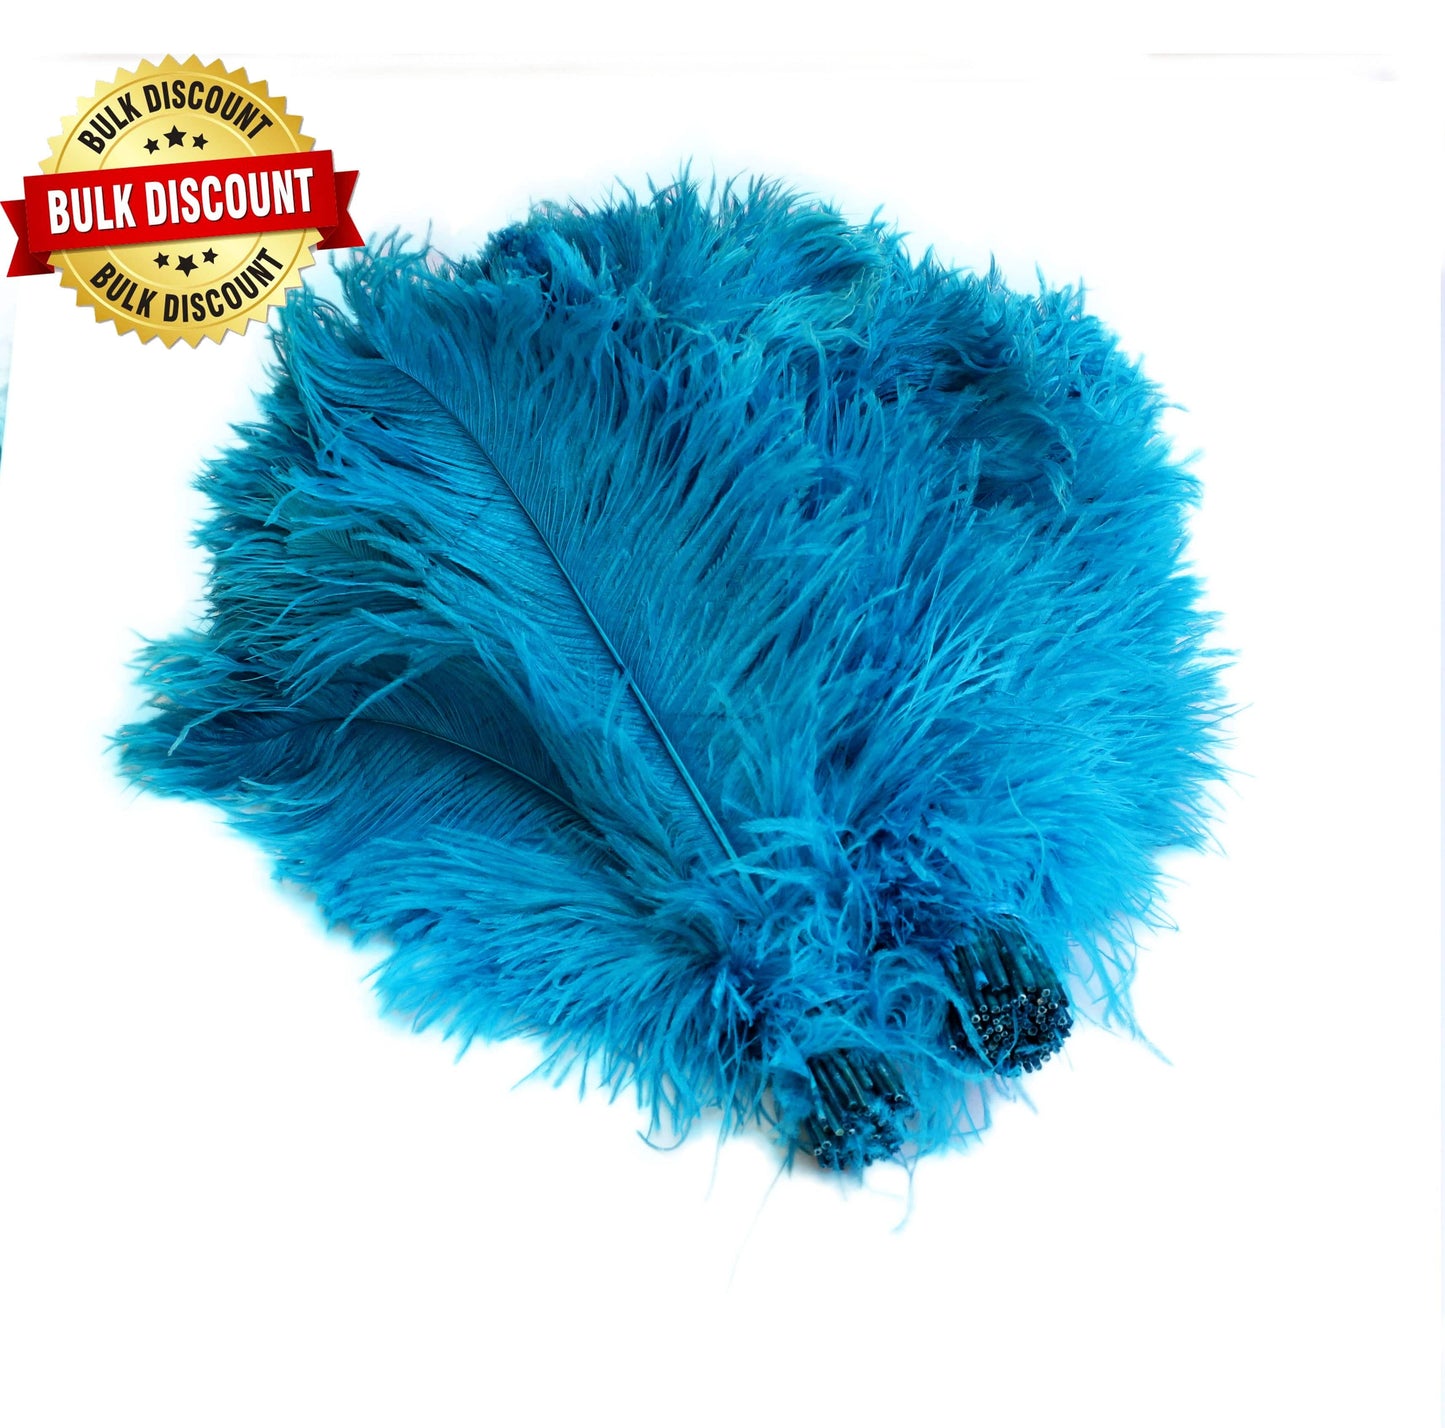 1/2 Lb. - 25-29 Royal Blue Large Ostrich Wing Plume Wholesale Feathers  (Bulk)